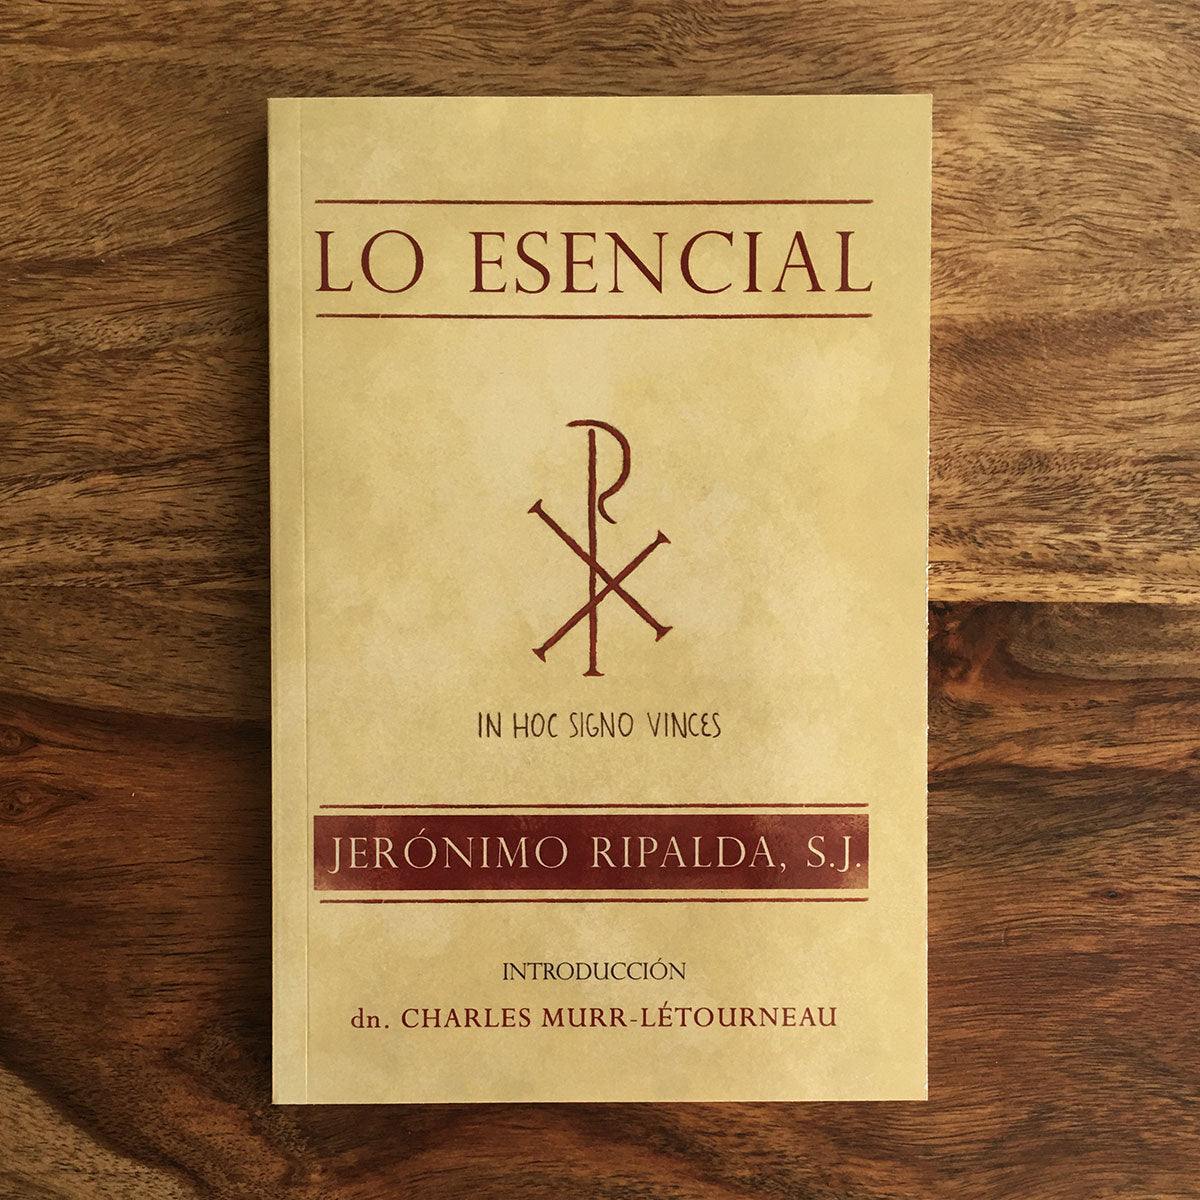 Lo Esencial: Catecismo de la doctrina cristiana - P. Jerónimo Ripalda S.J.